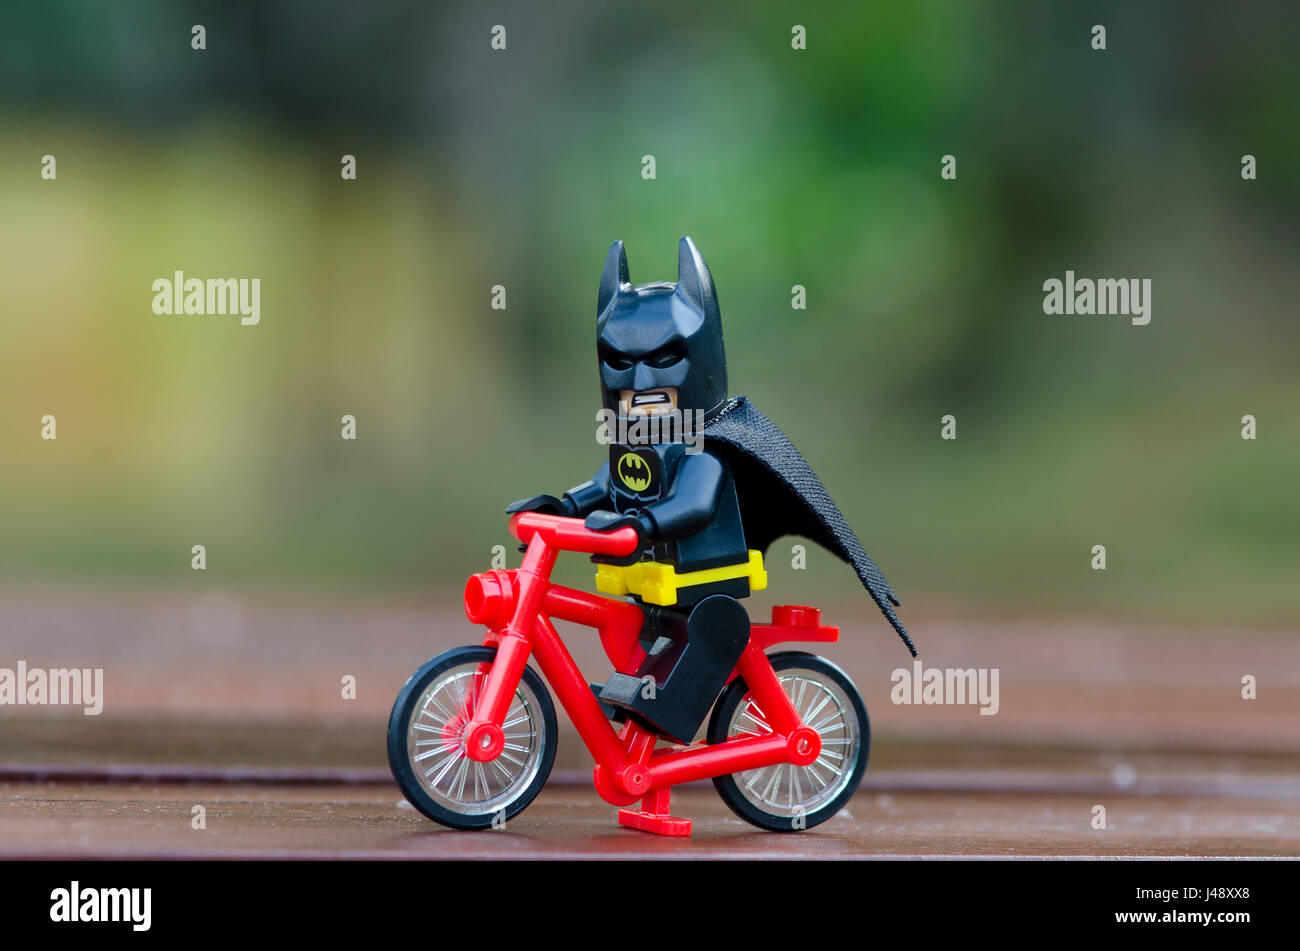 Lego batman minifigures riding bicycle. Stock Photo